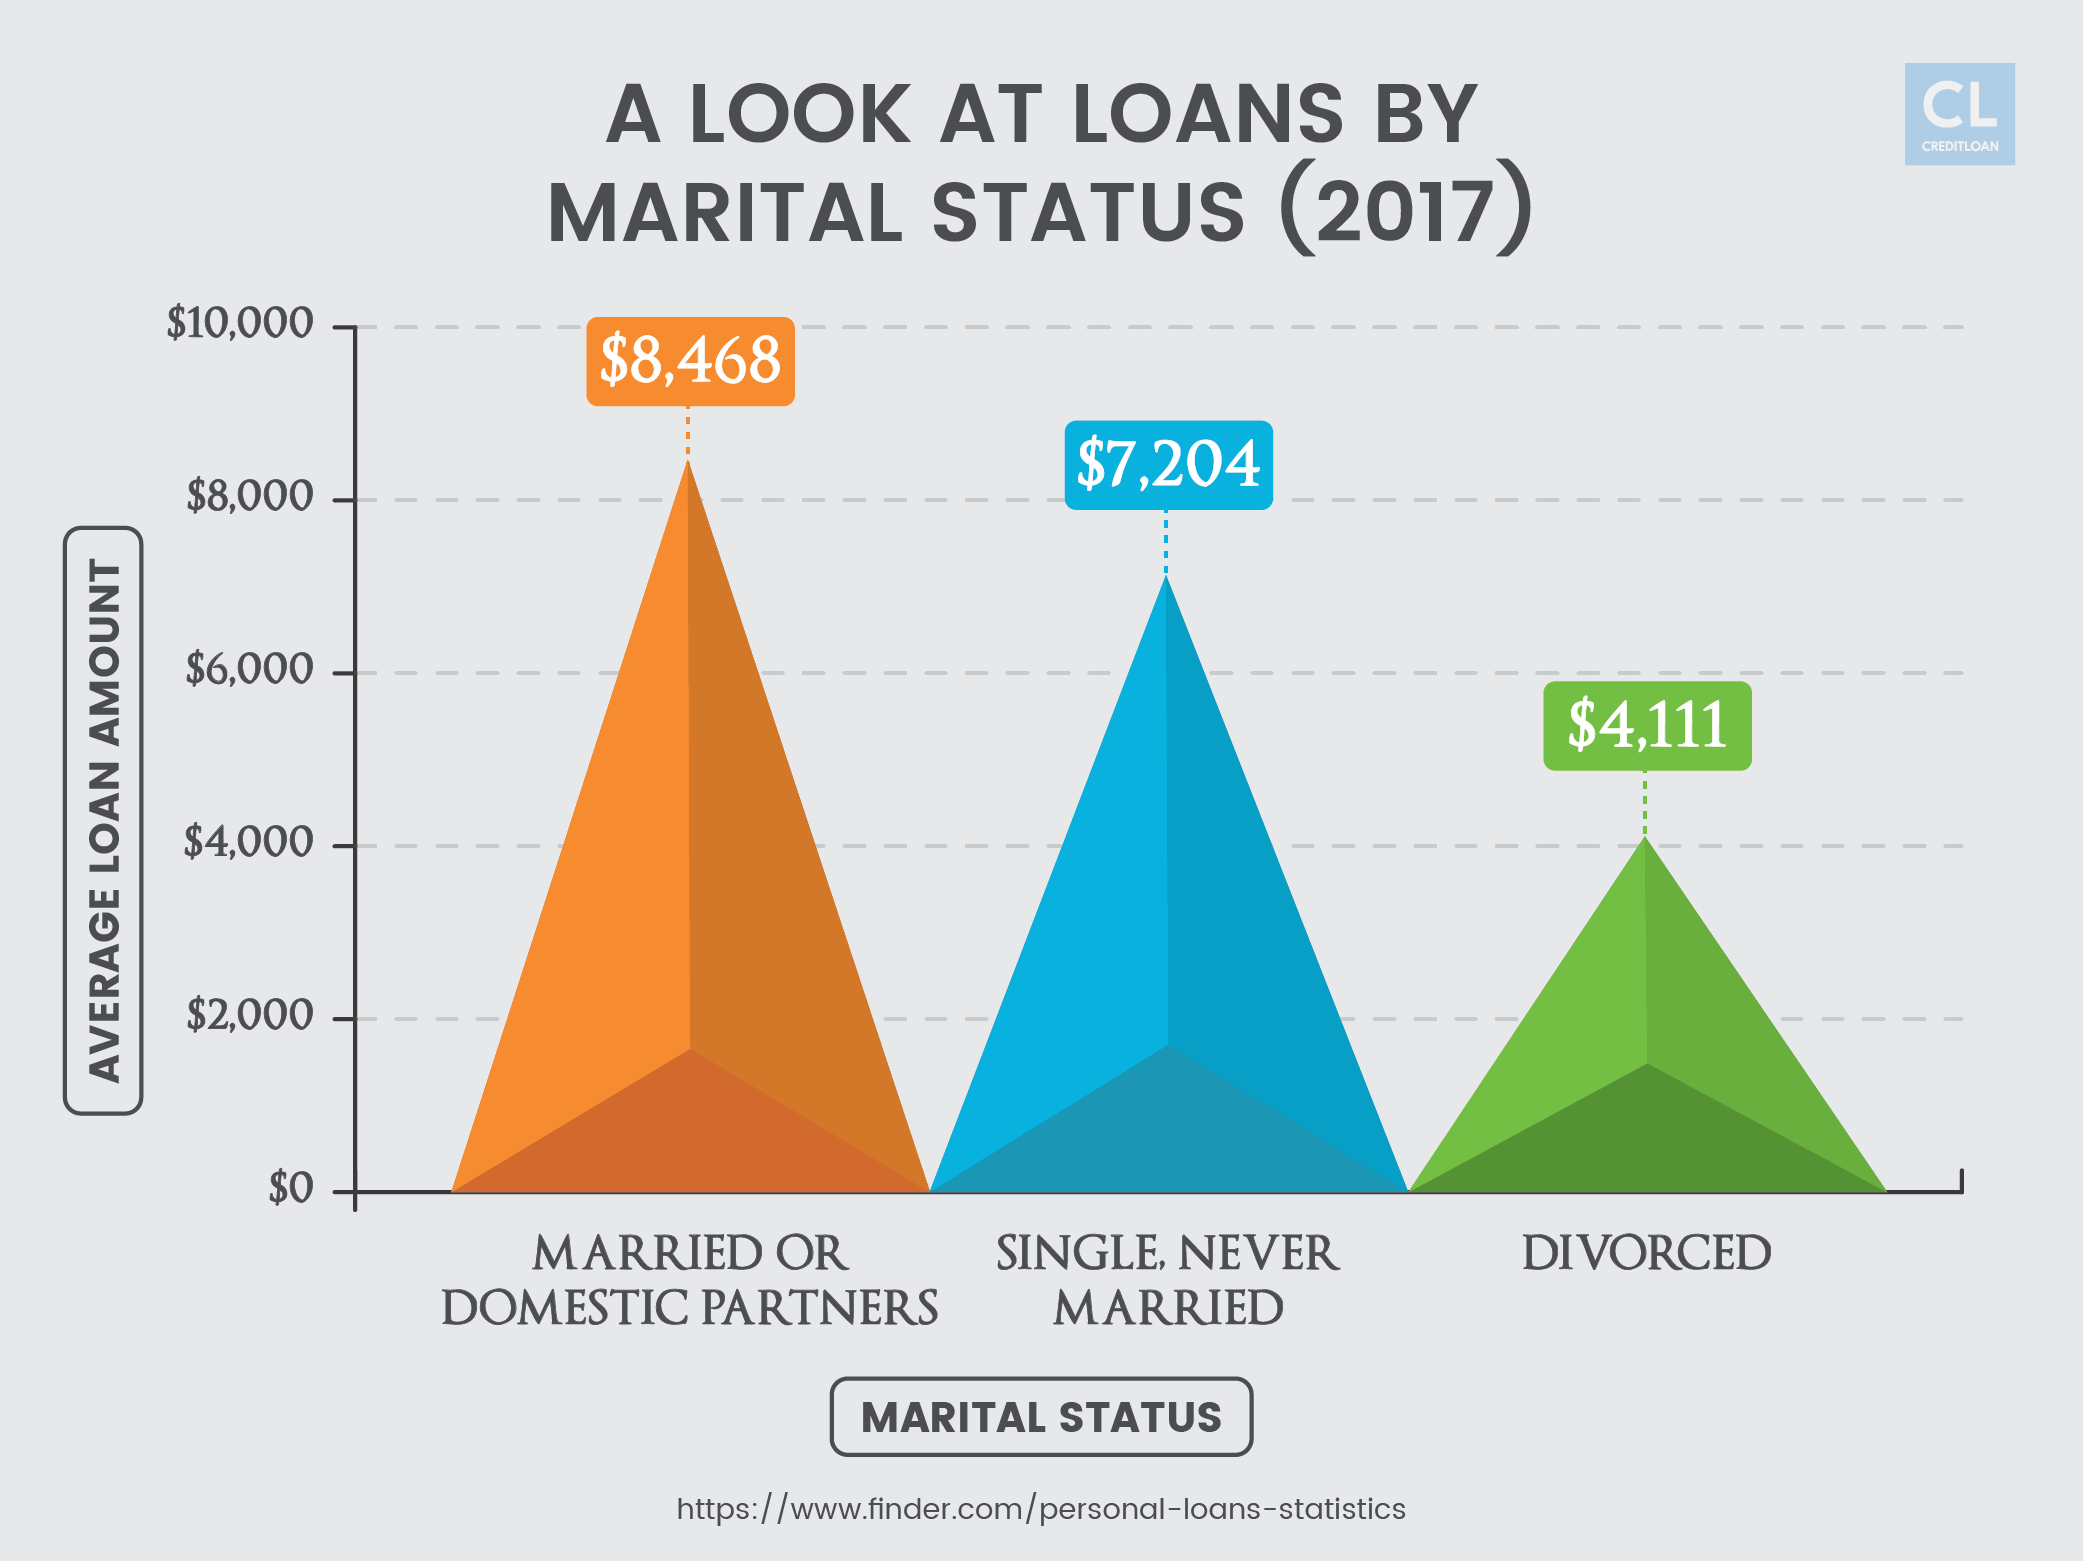 2017 Data Showing Loans by Marital Status